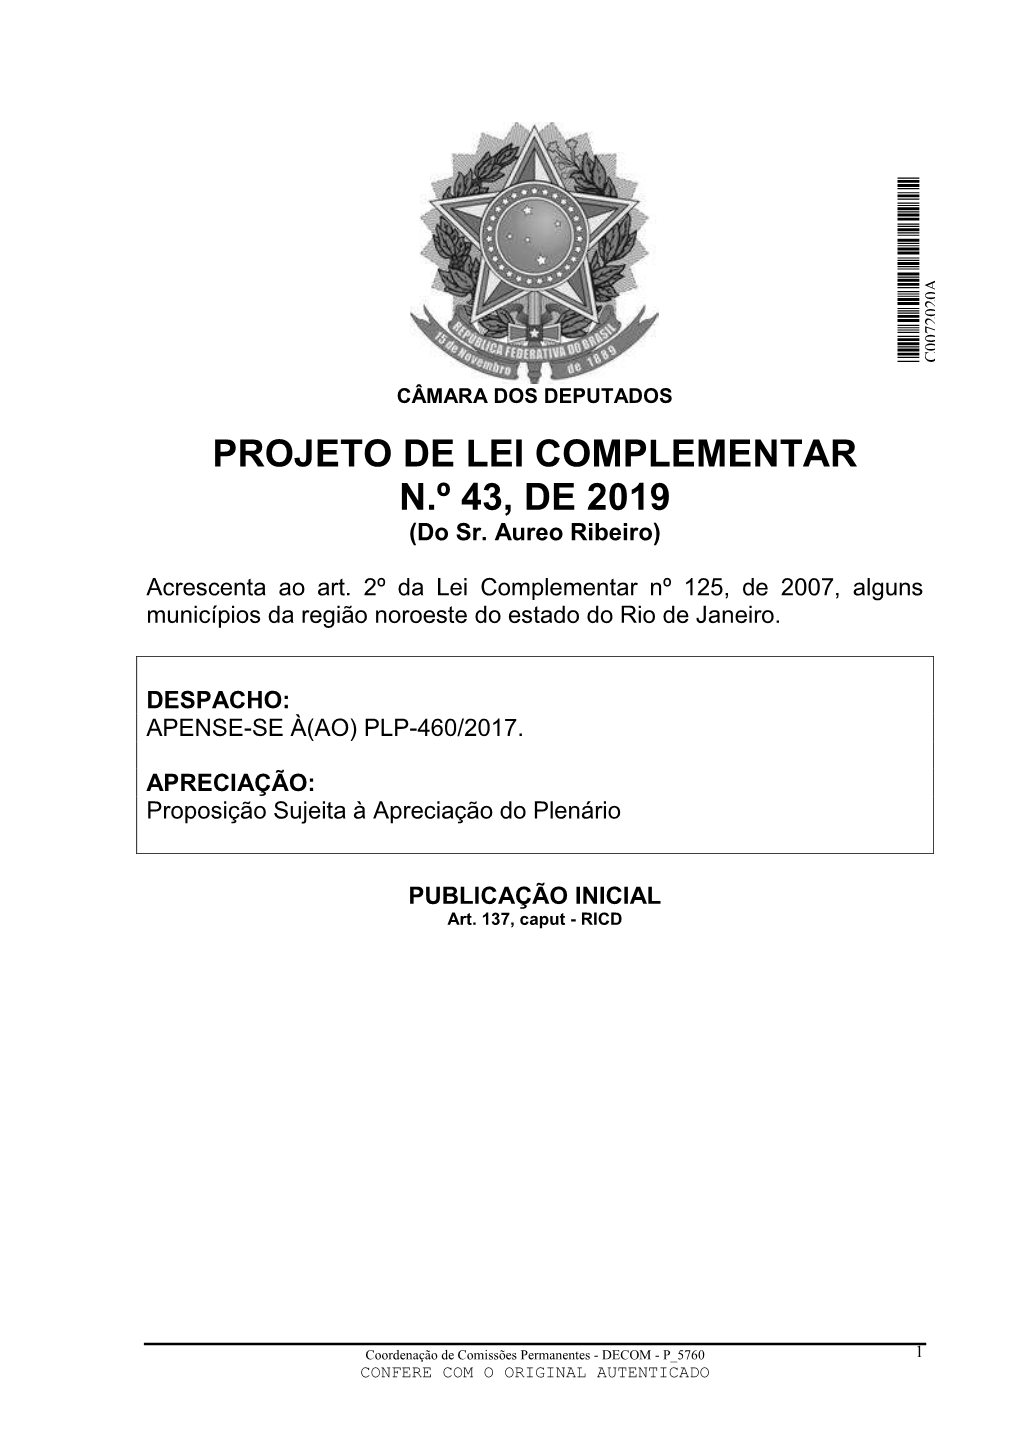 PROJETO DE LEI COMPLEMENTAR N.º 43, DE 2019 (Do Sr